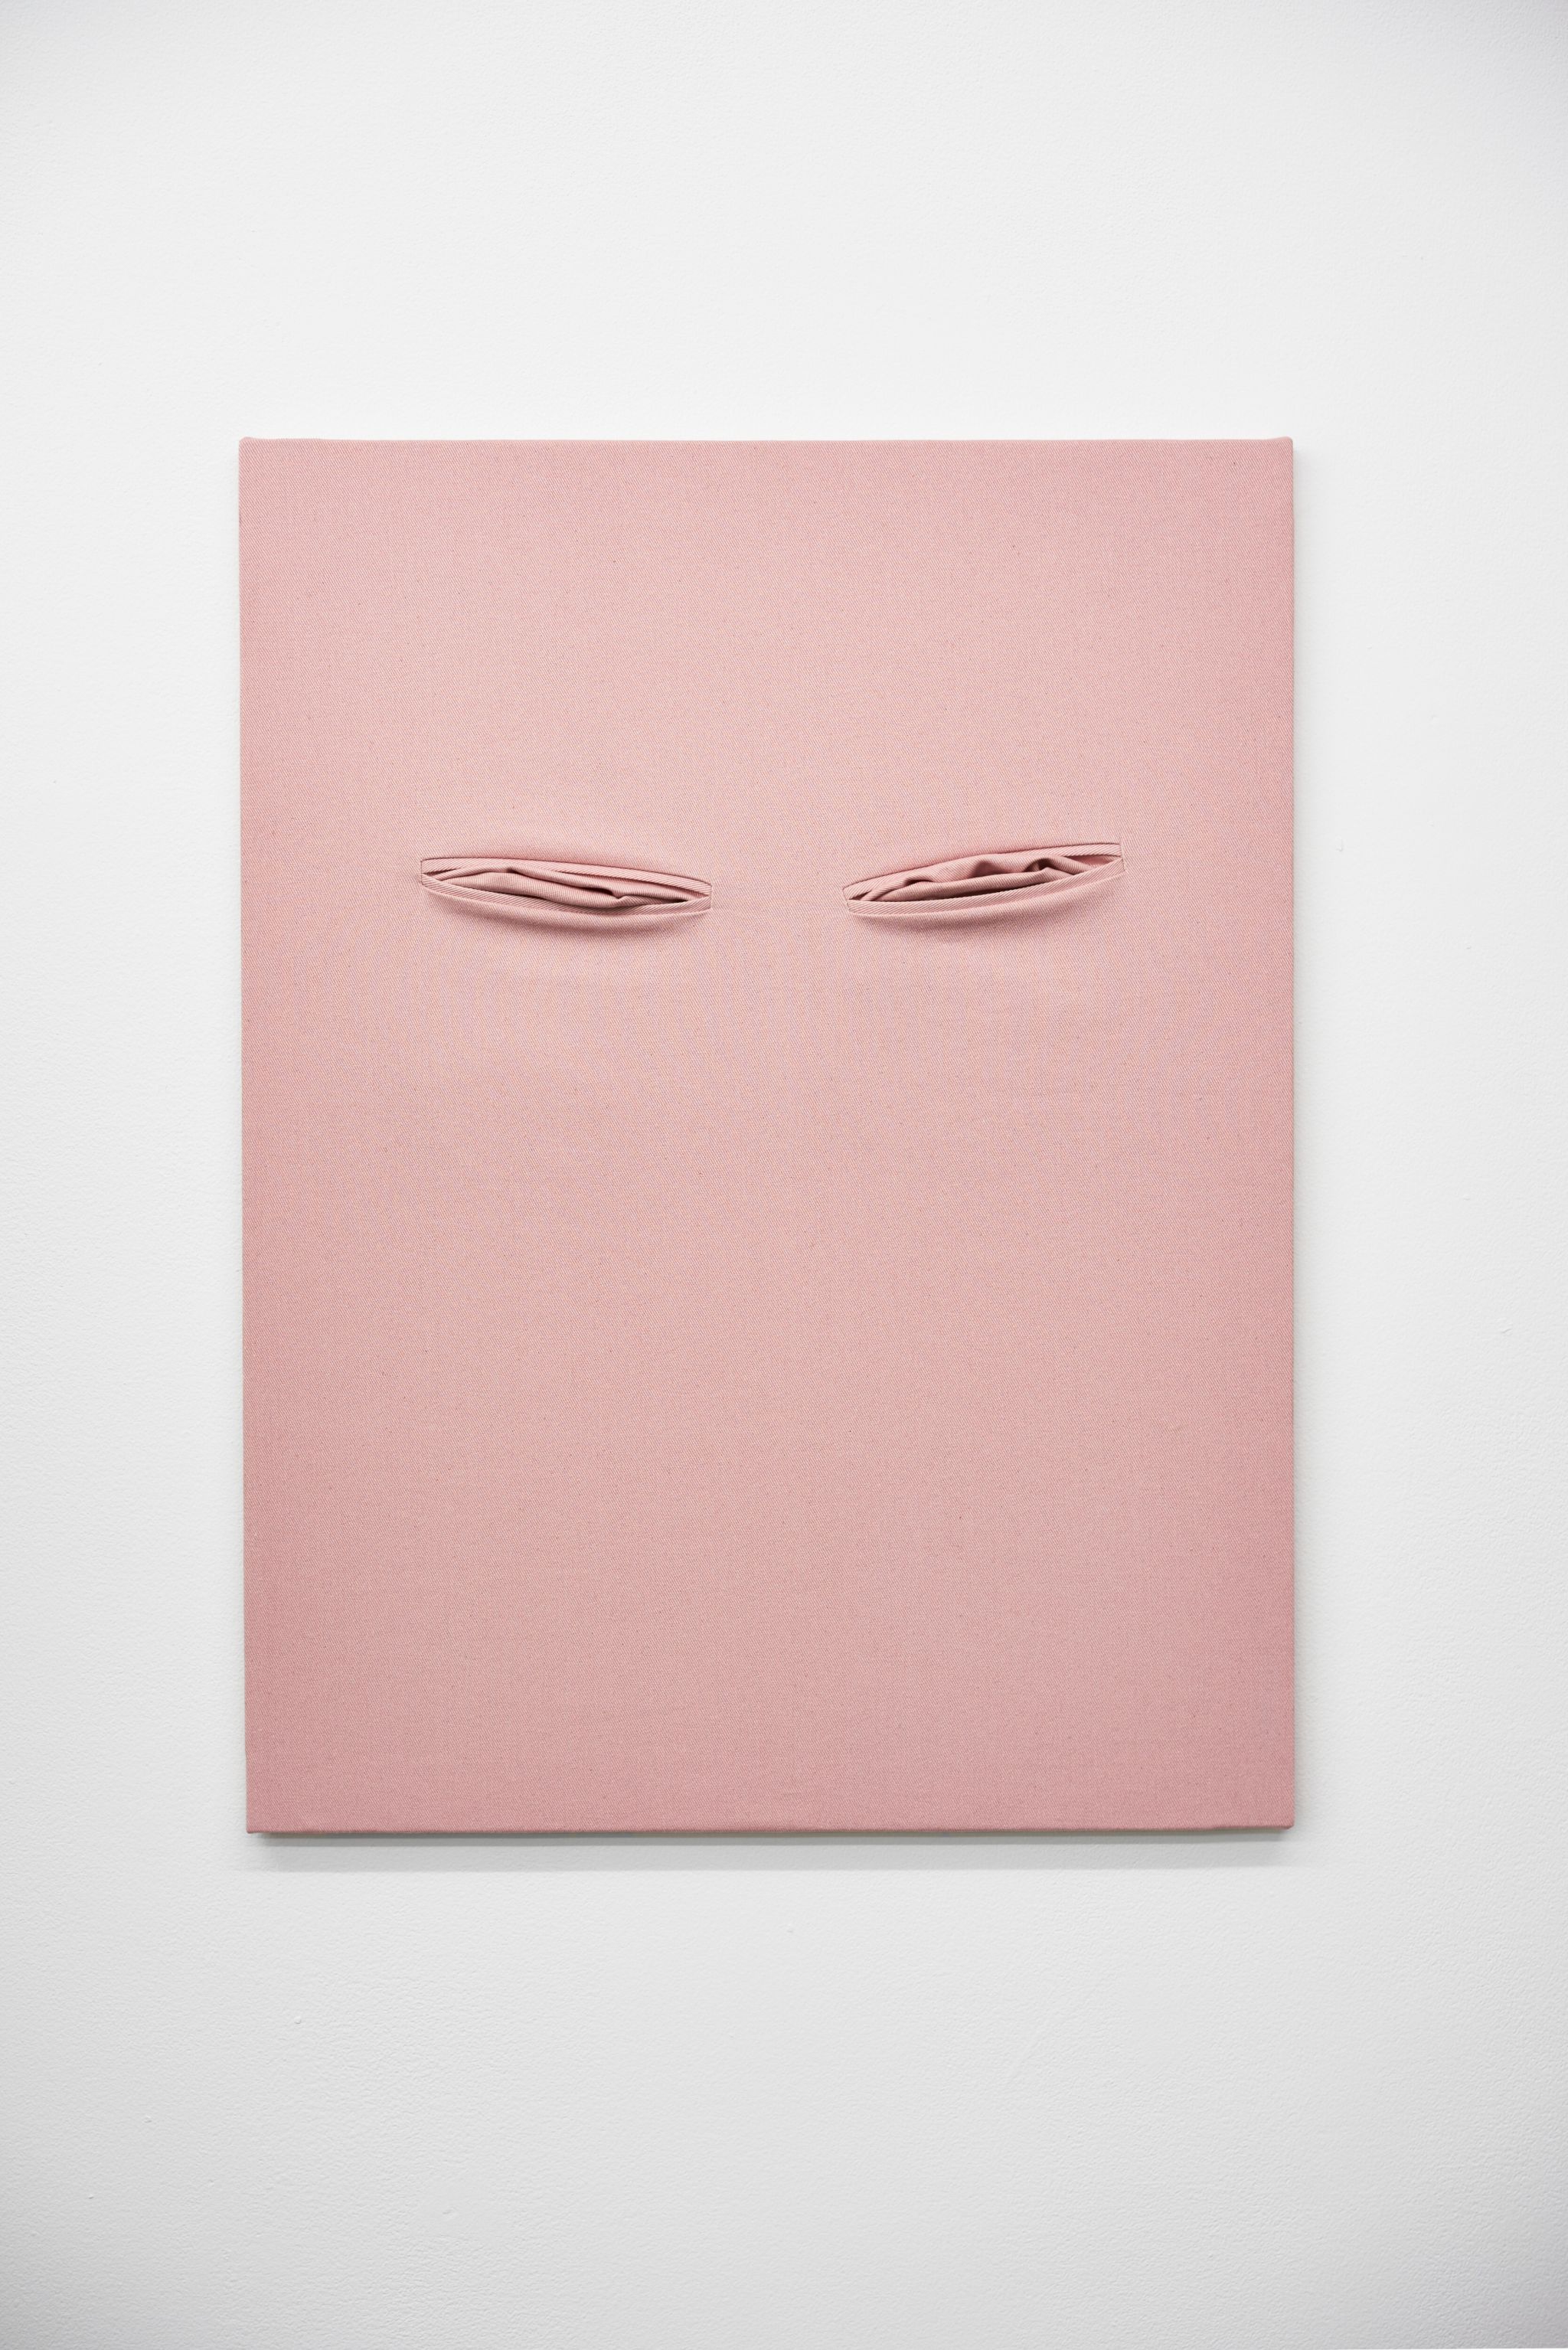 Davide Stucchi, Closed eyes, 2015, Denim on canvas, 80.5 ⁠× ⁠60.5 ⁠× ⁠2 ⁠⁠cm